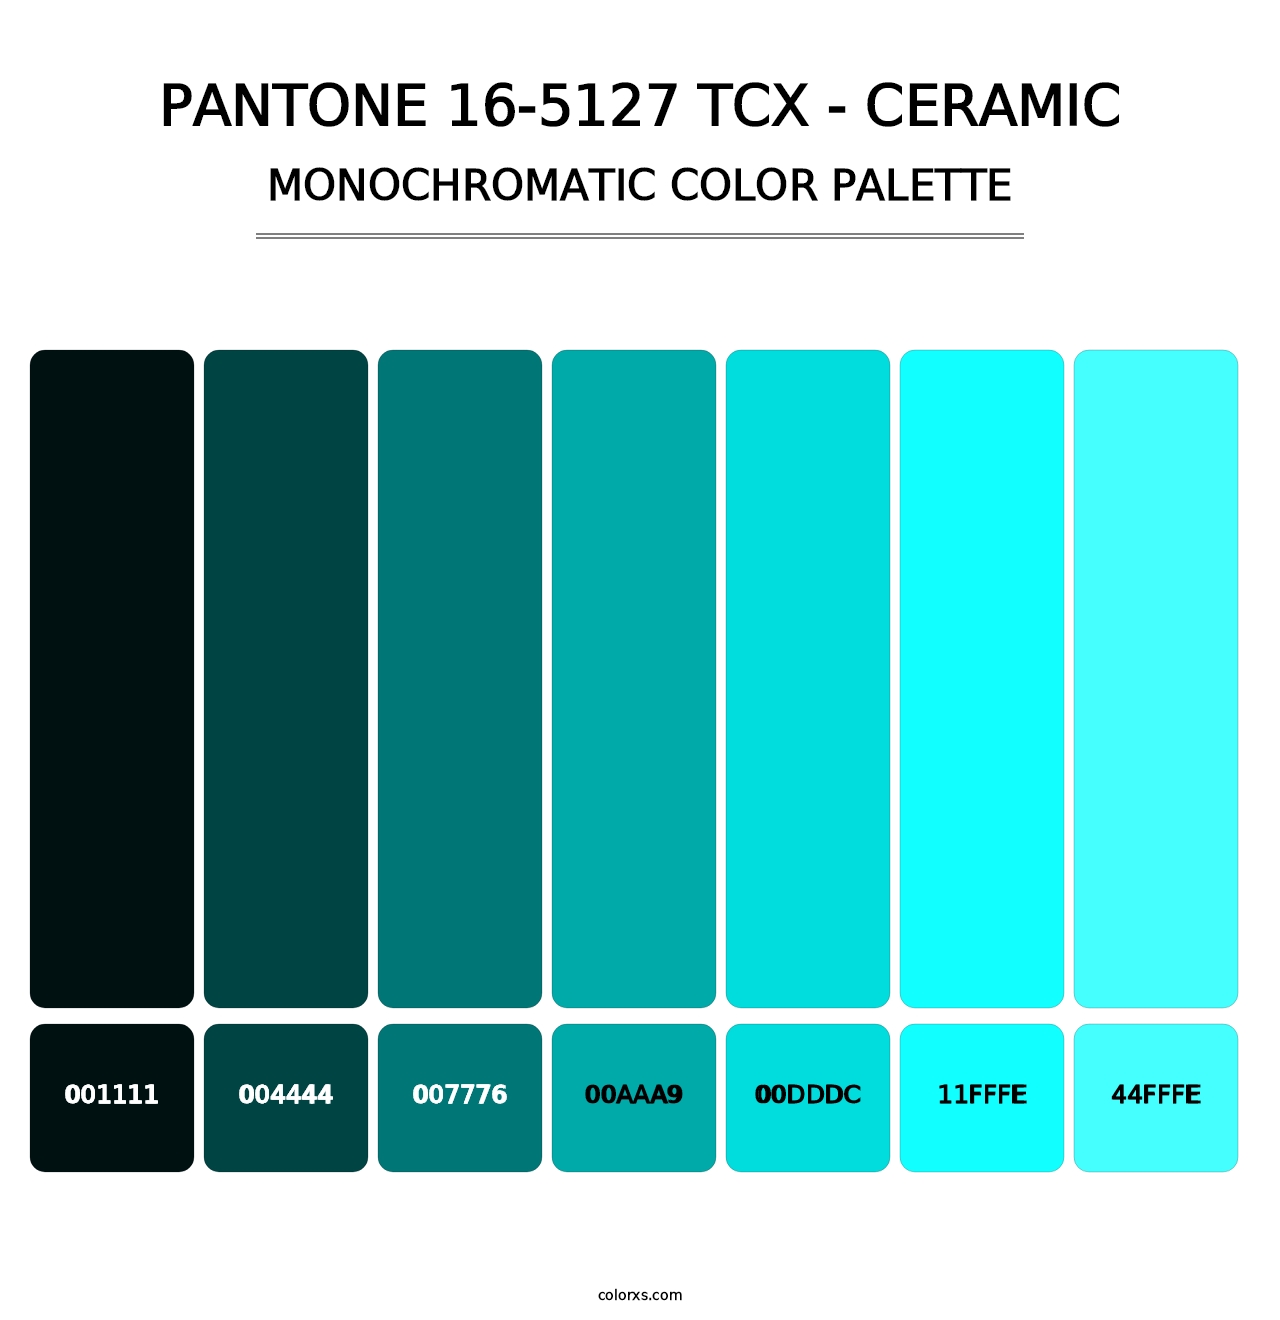 PANTONE 16-5127 TCX - Ceramic - Monochromatic Color Palette